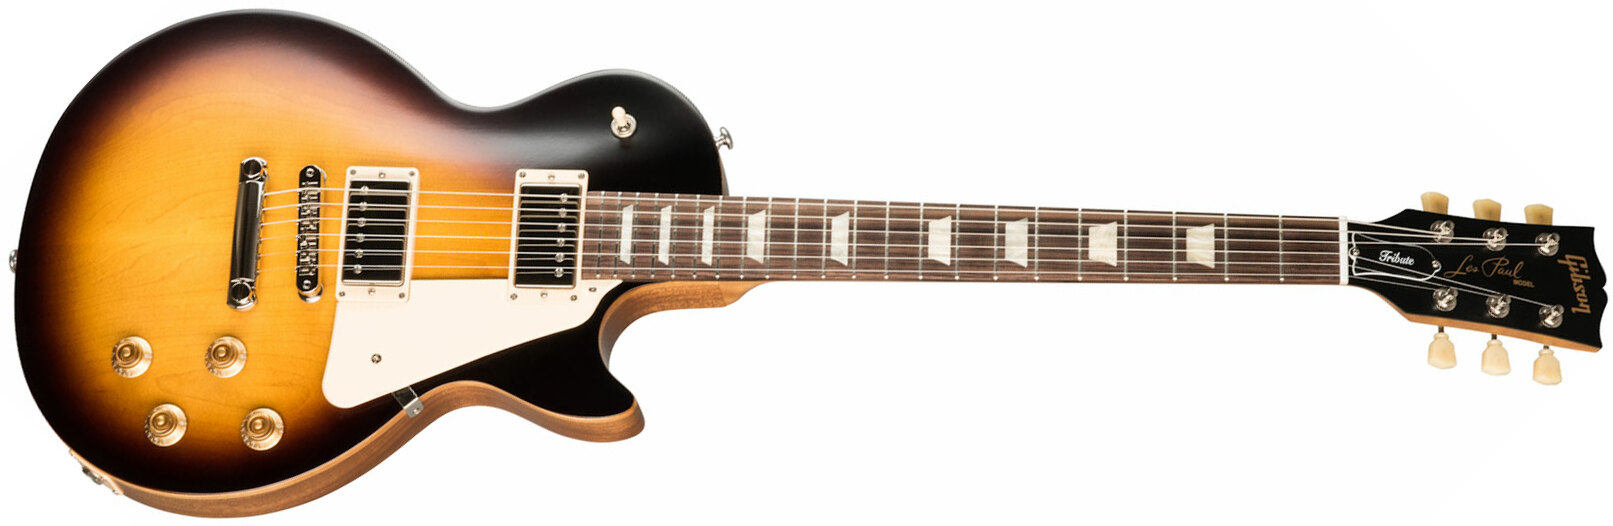 Gibson Les Paul Tribute Modern 2h Ht Rw - Satin Tobacco Burst - Enkel gesneden elektrische gitaar - Main picture